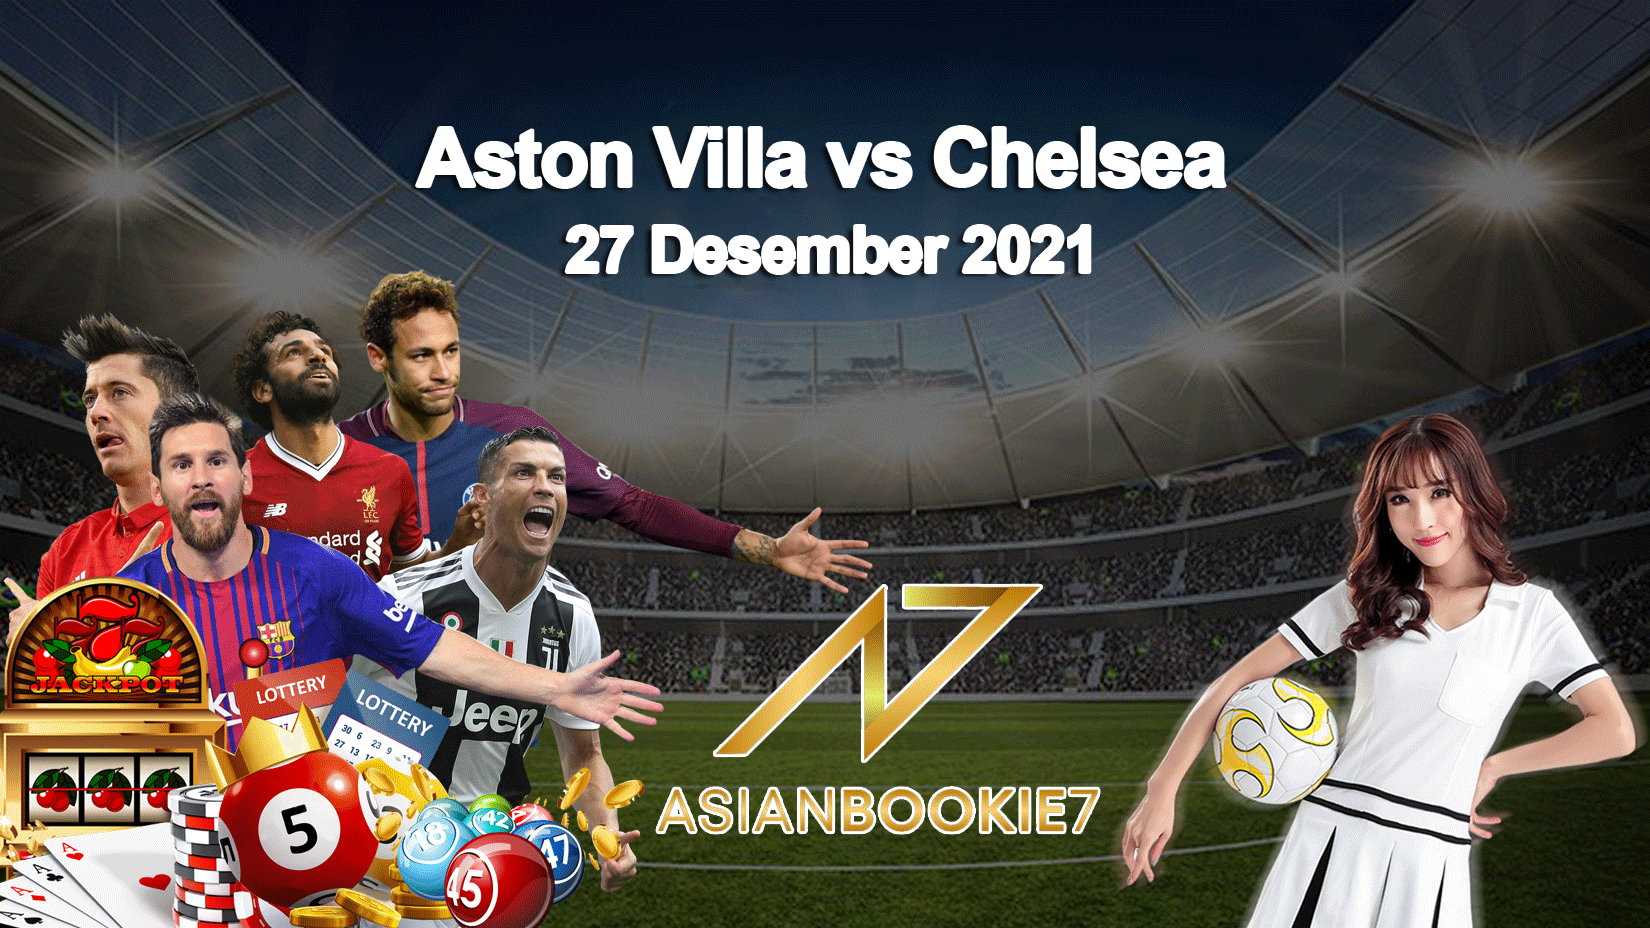 Prediksi Aston Villa vs Chelsea 27 Desember 2021